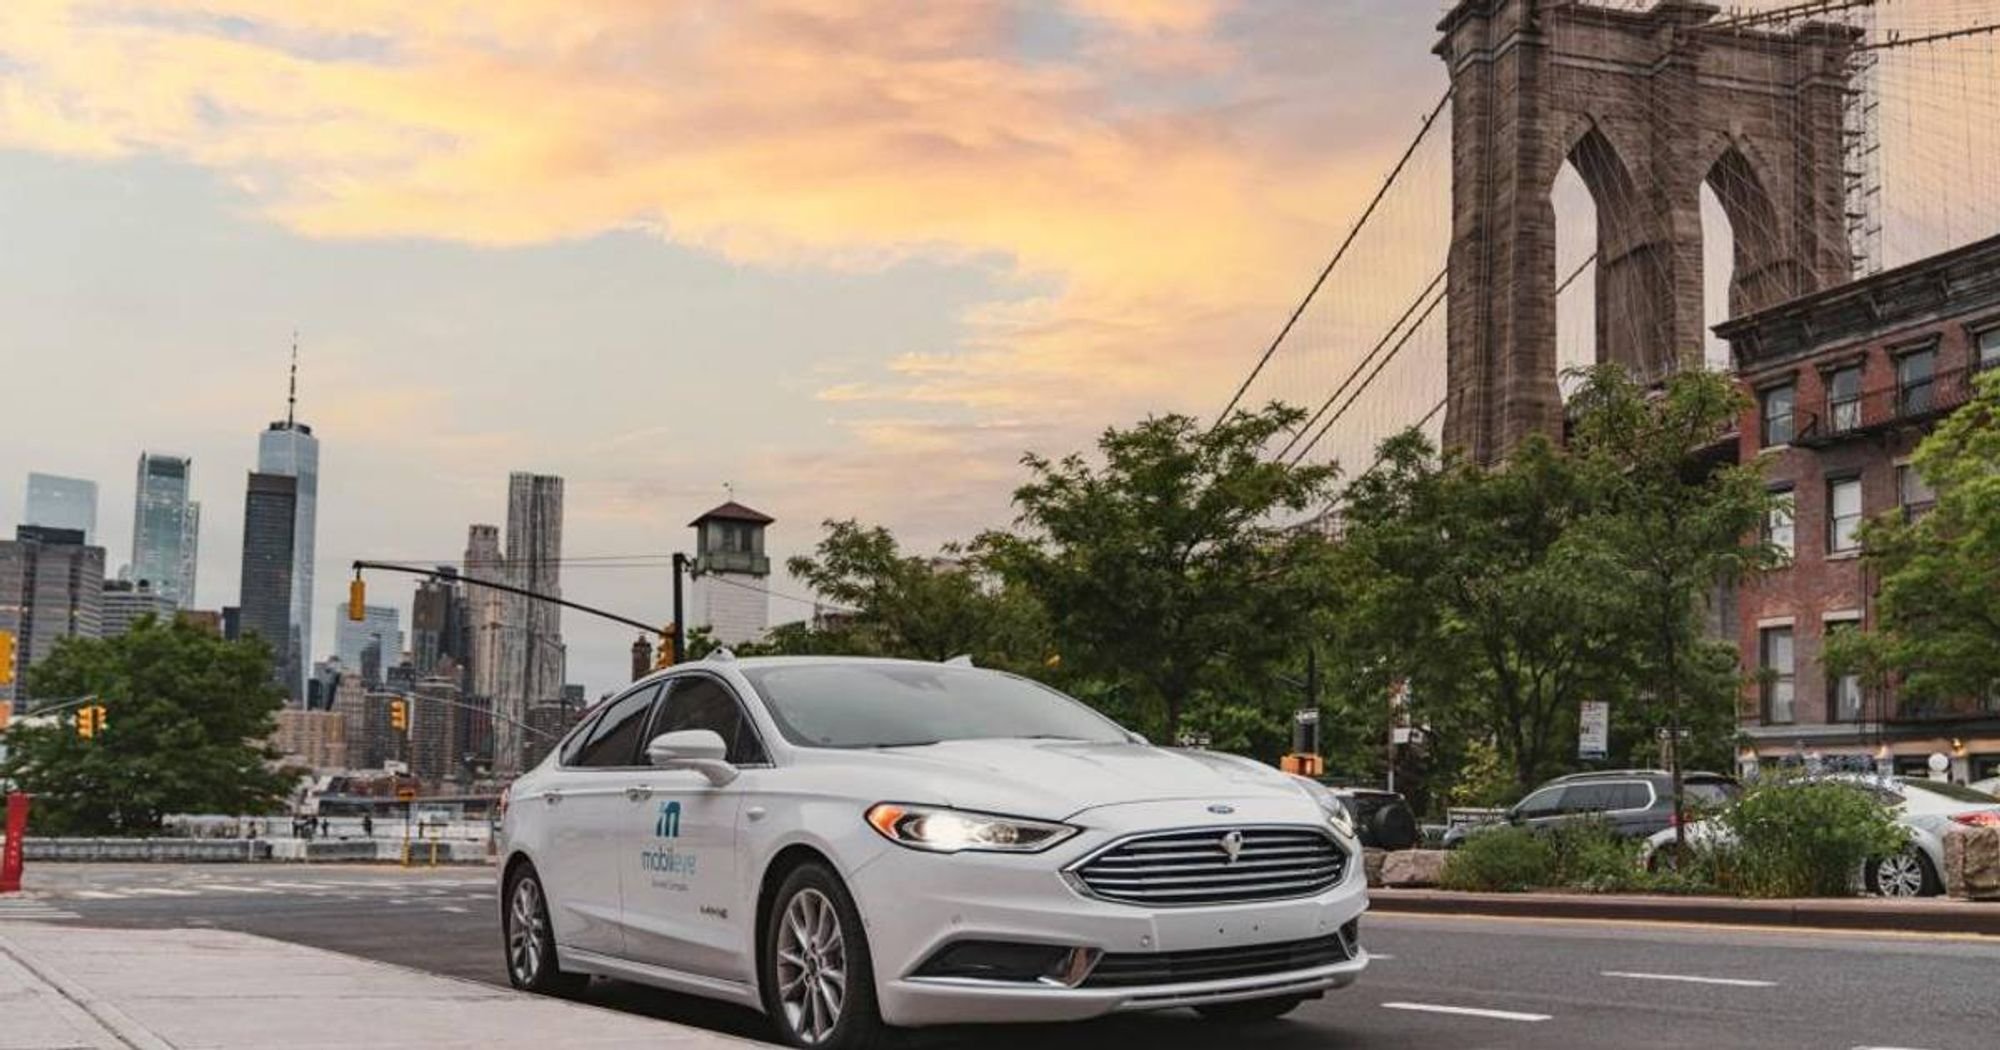 Exclusive: Intel's autonomous vehicle unit Mobileye ends NYC testing